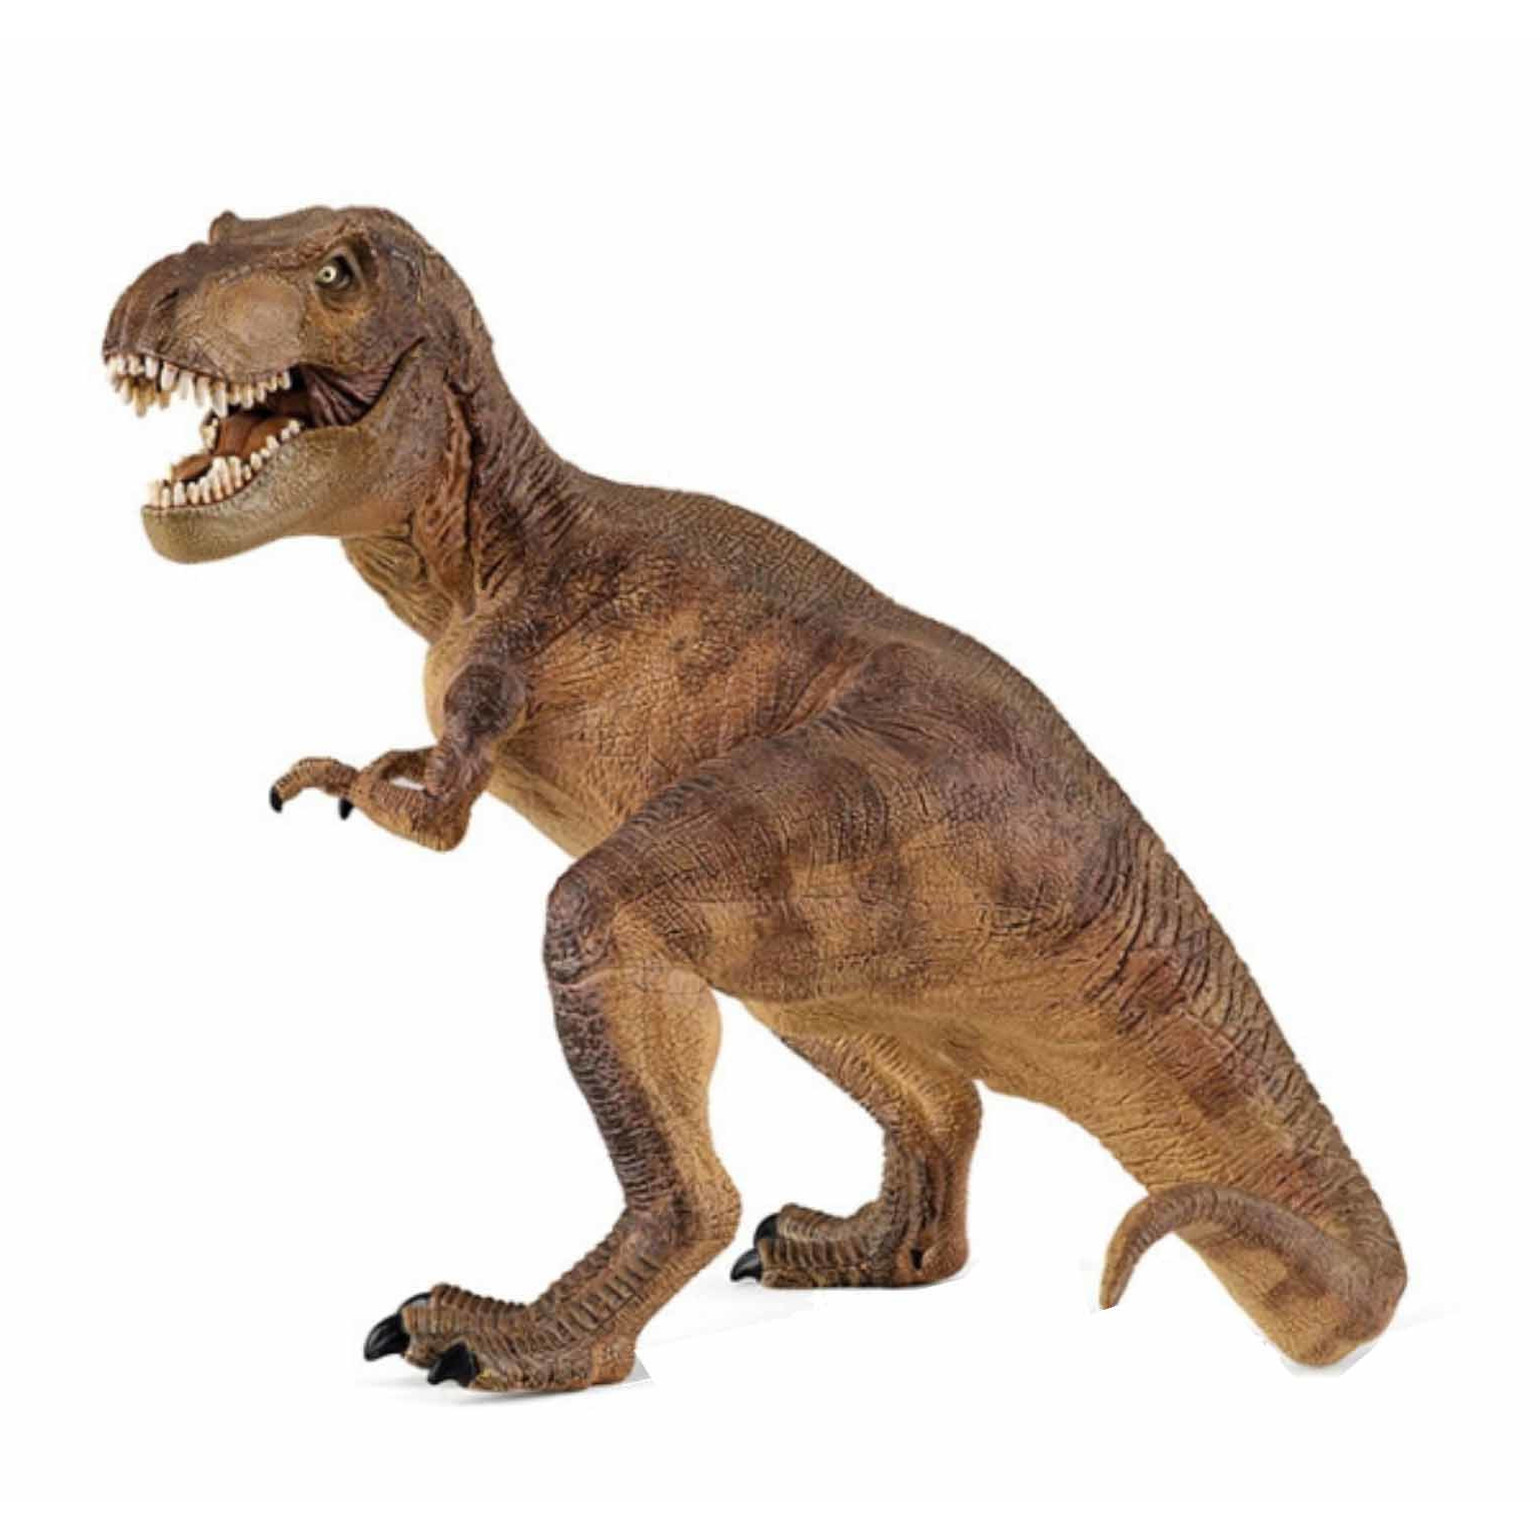 Plastic speelfiguur t-rex dinosaurus 17 cm